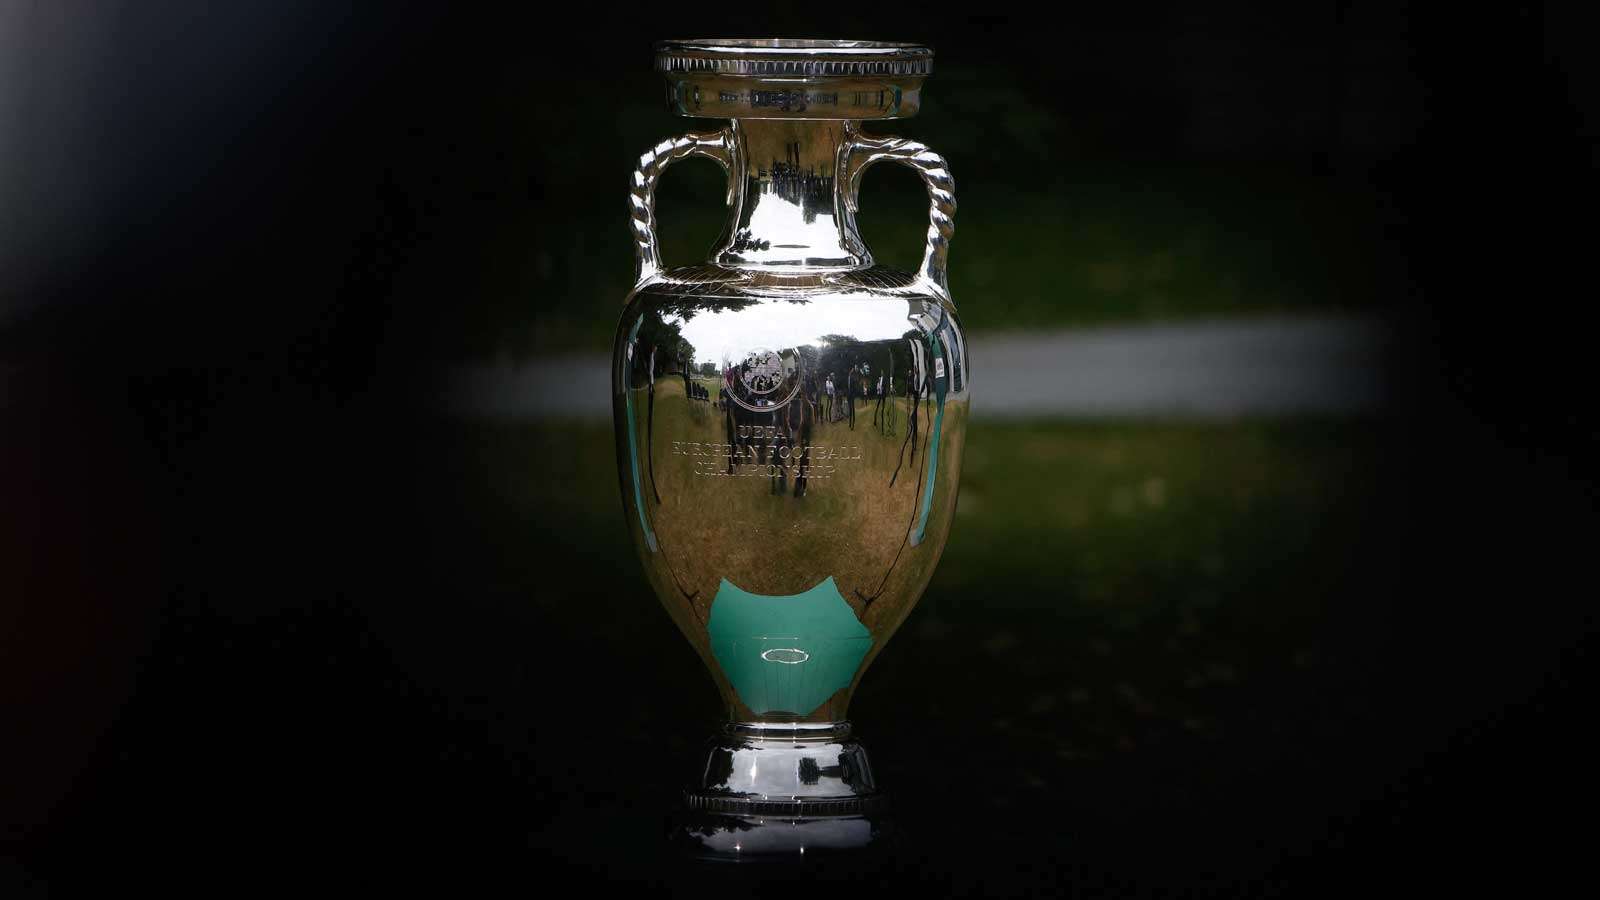 European Championship trophy